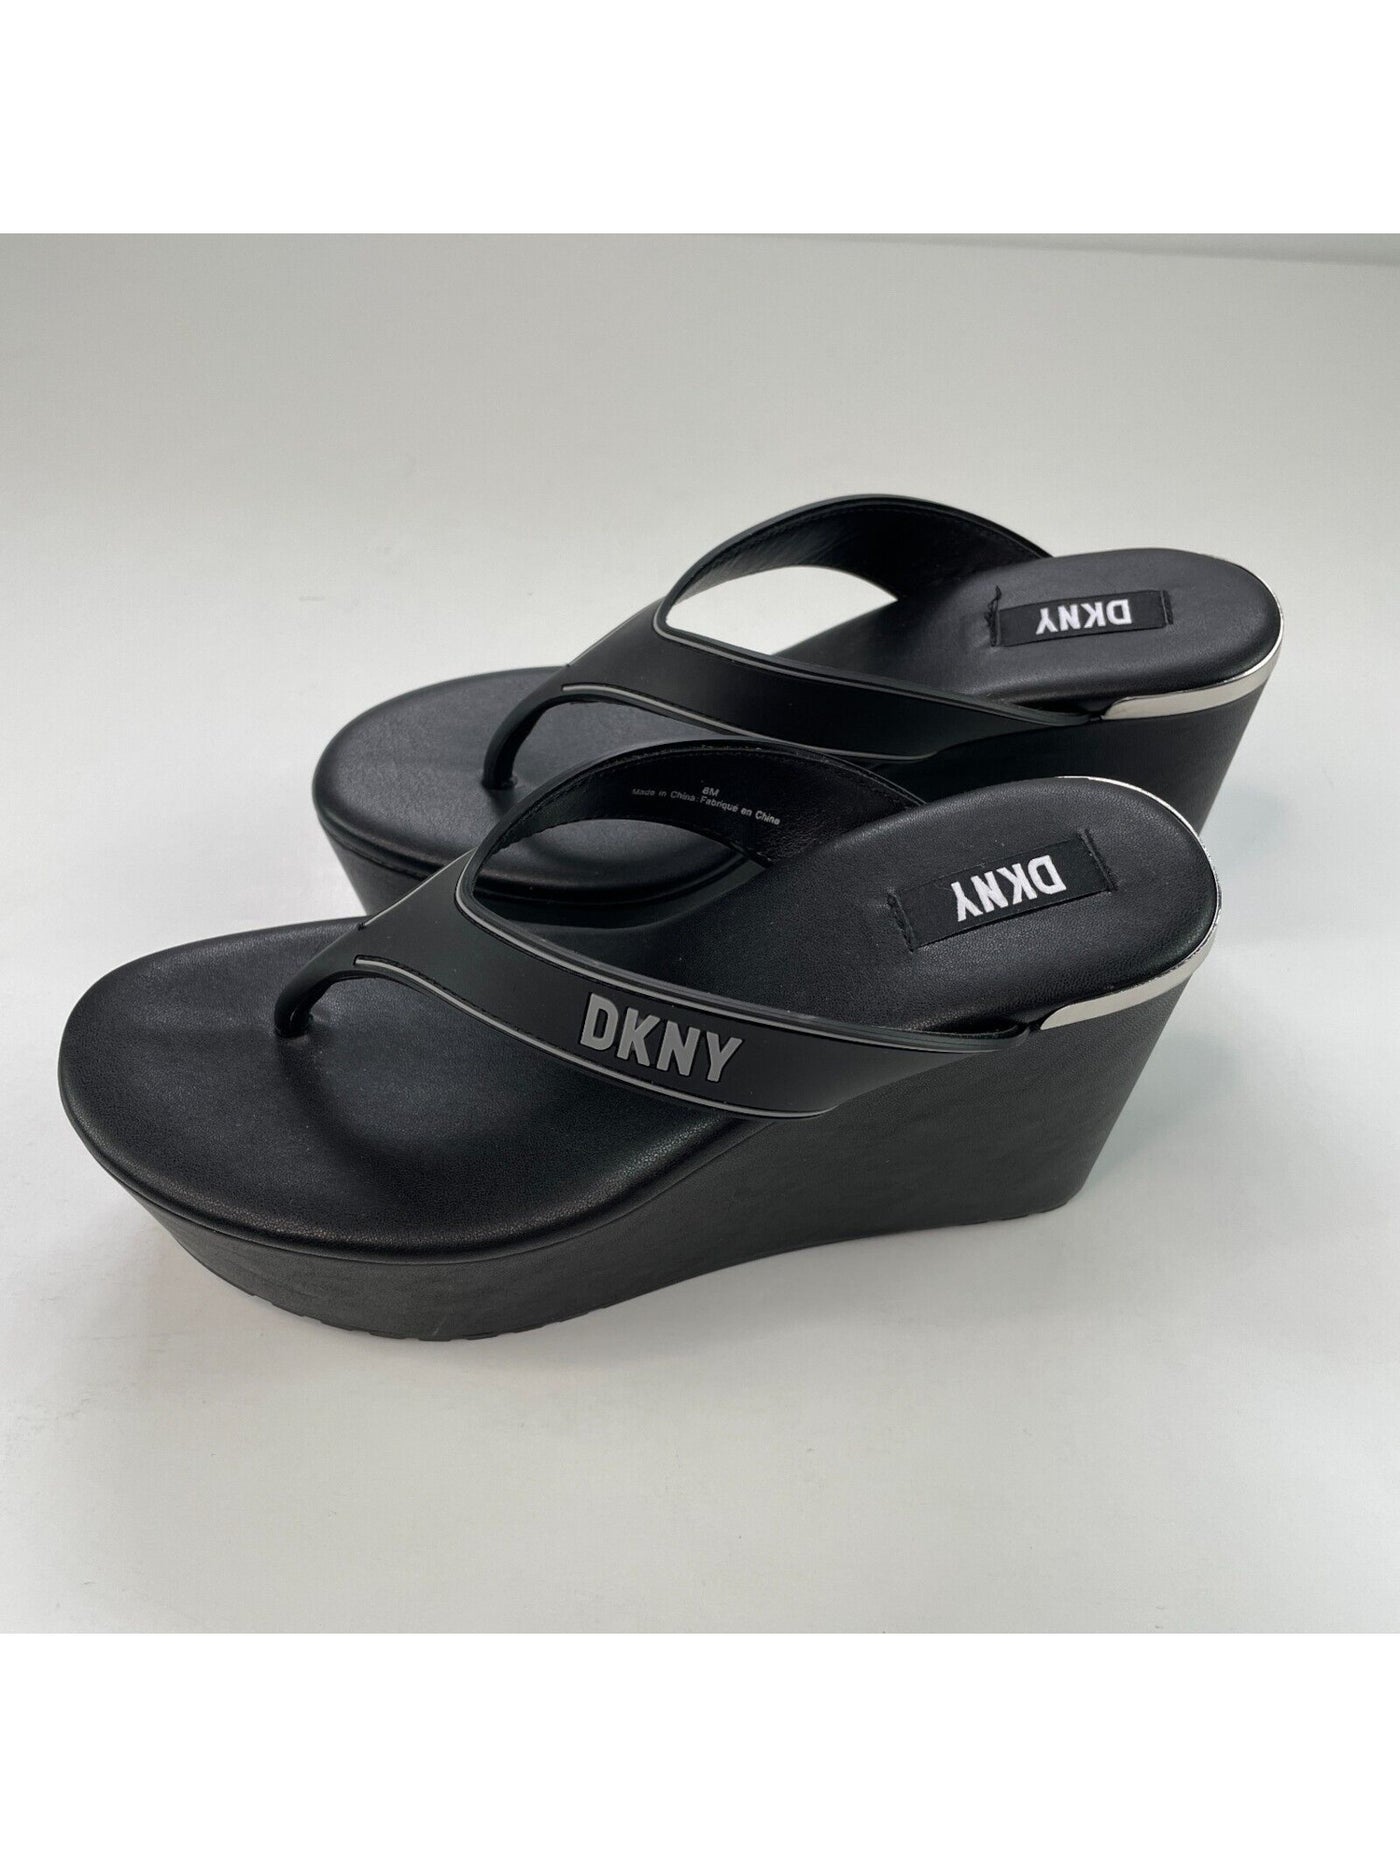 DKNY Womens Black 2" Platform Comfort Logo Trina Round Toe Wedge Slip On Thong Sandals Shoes 8 M